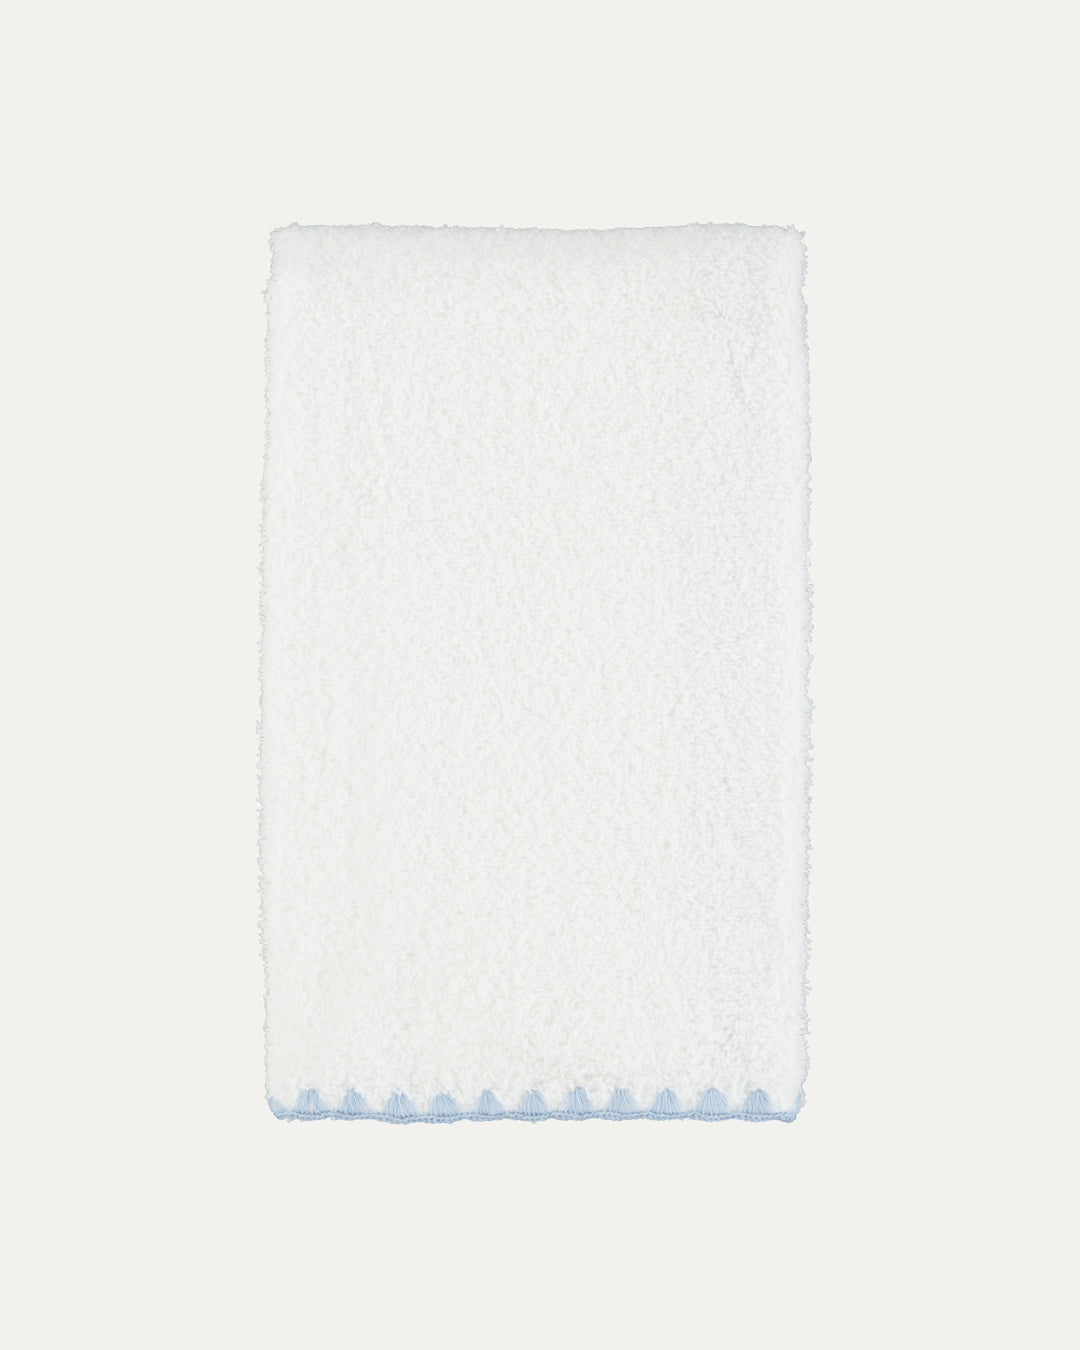 Concha Bath Towel, White with Blue